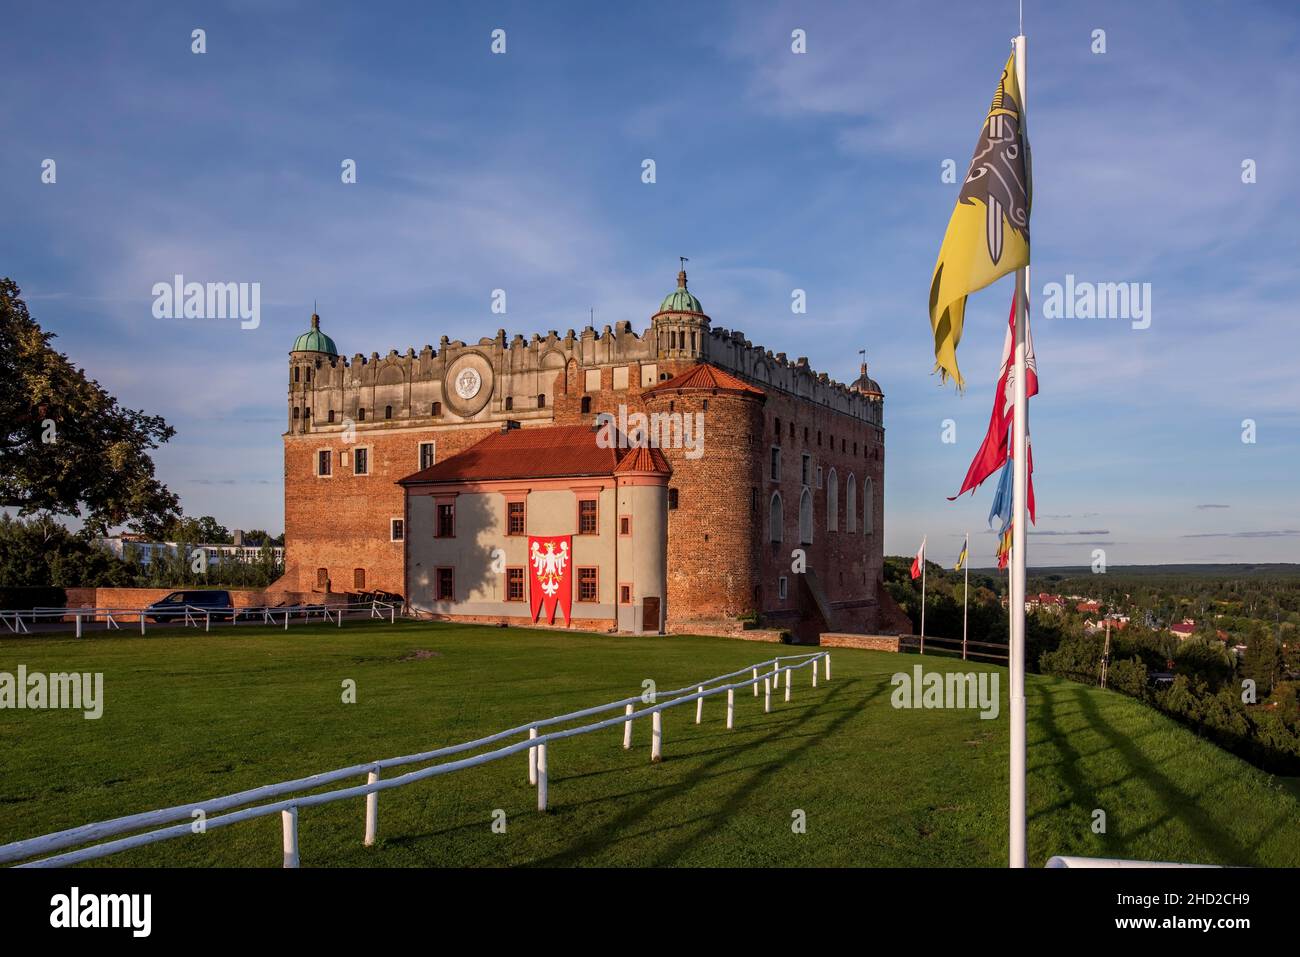 View towards medieval teutonic castle in Golub-Dobrzyn in Poland Stock Photo